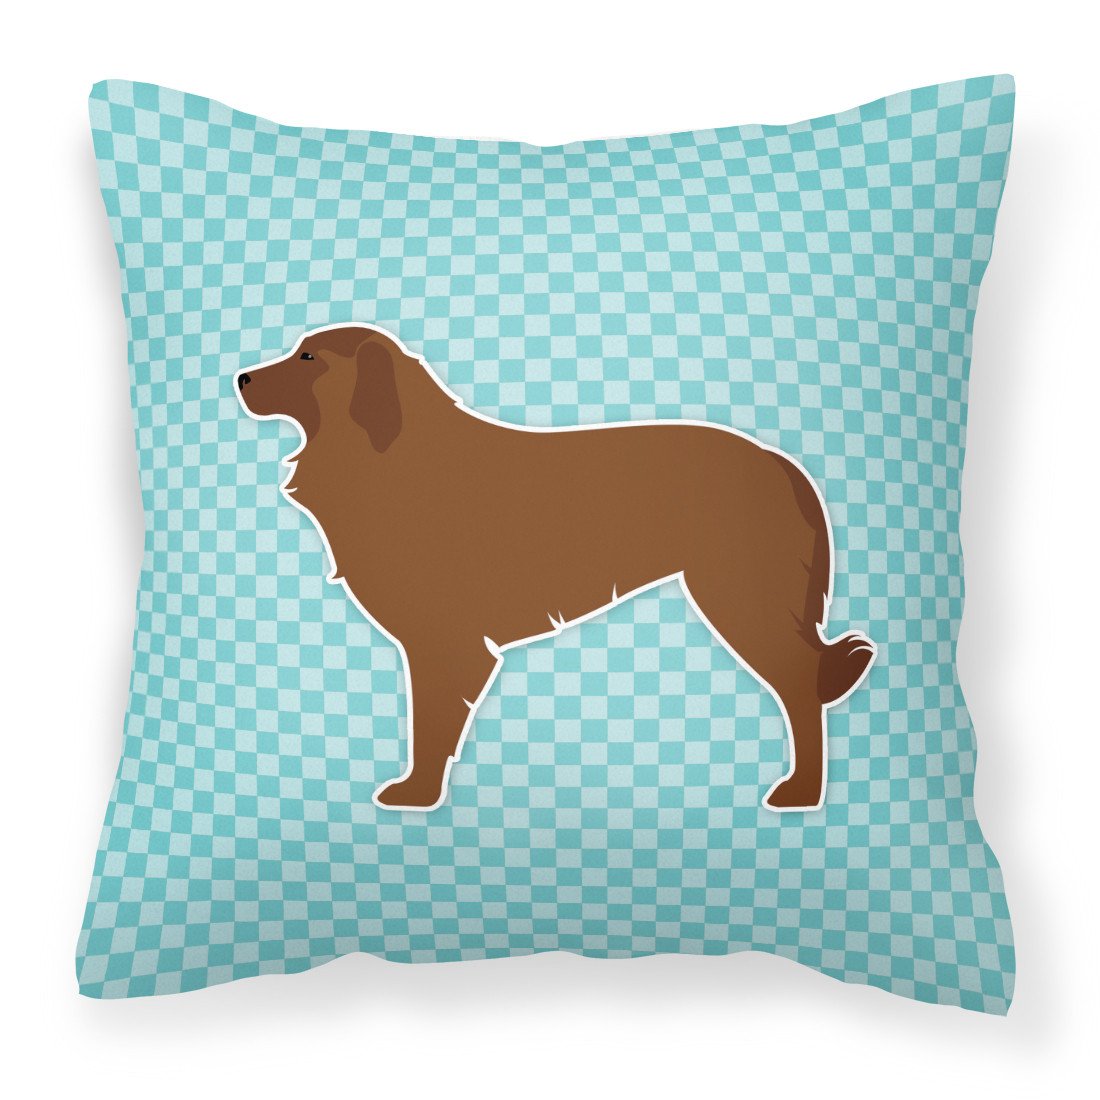 Portuguese Sheepdog Dog Checkerboard Blue Fabric Decorative Pillow BB3731PW1818 by Caroline's Treasures